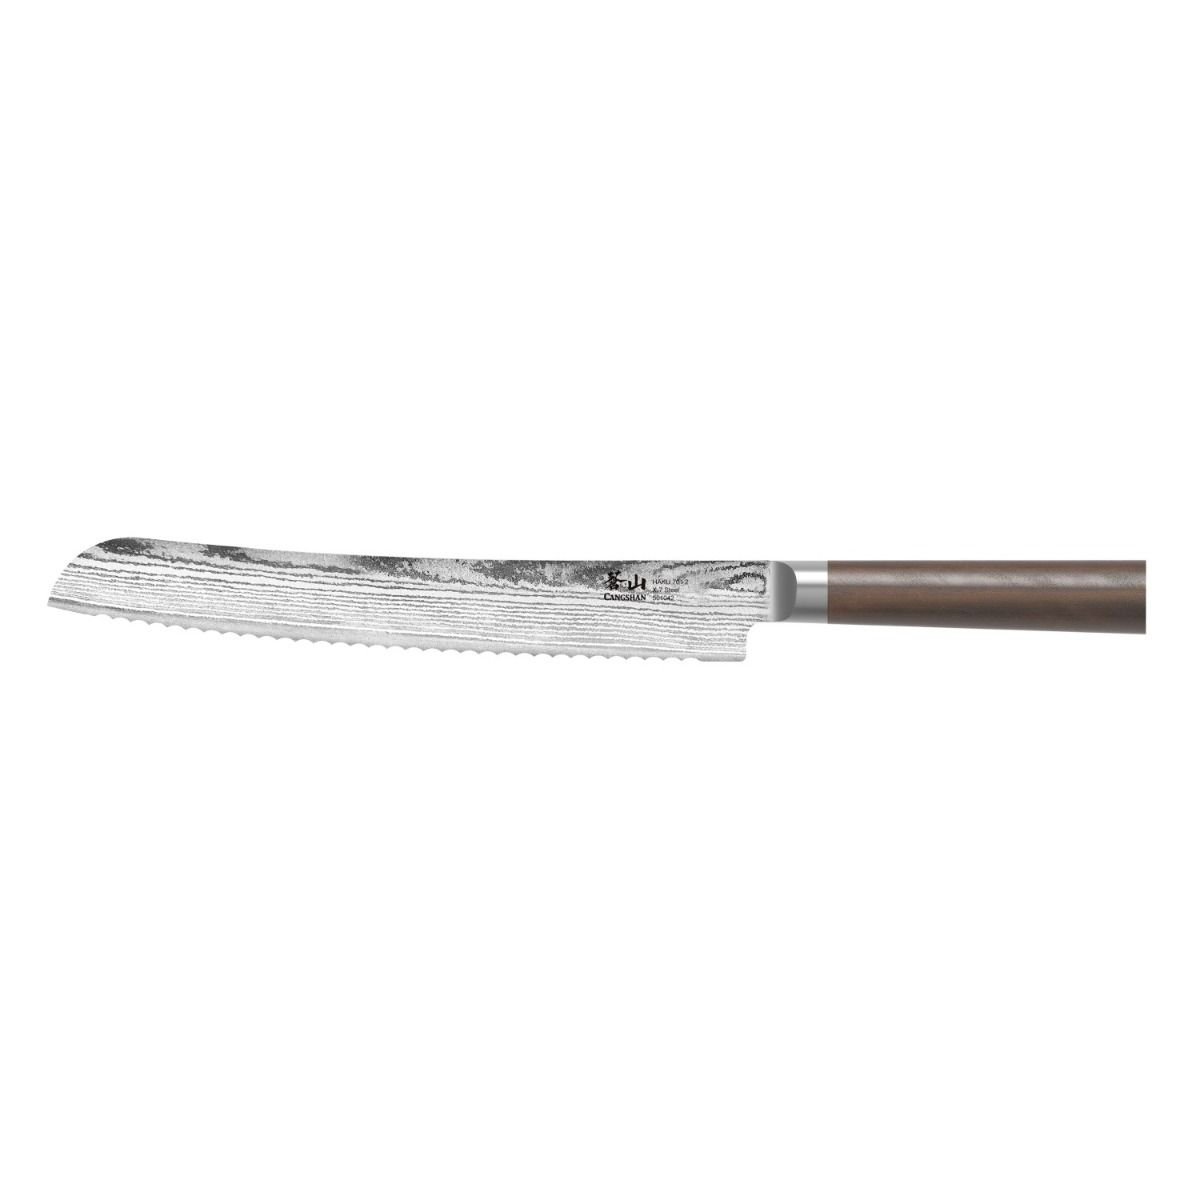 Cangshan Cutlery Haku Series 12-Piece Knife Block Set